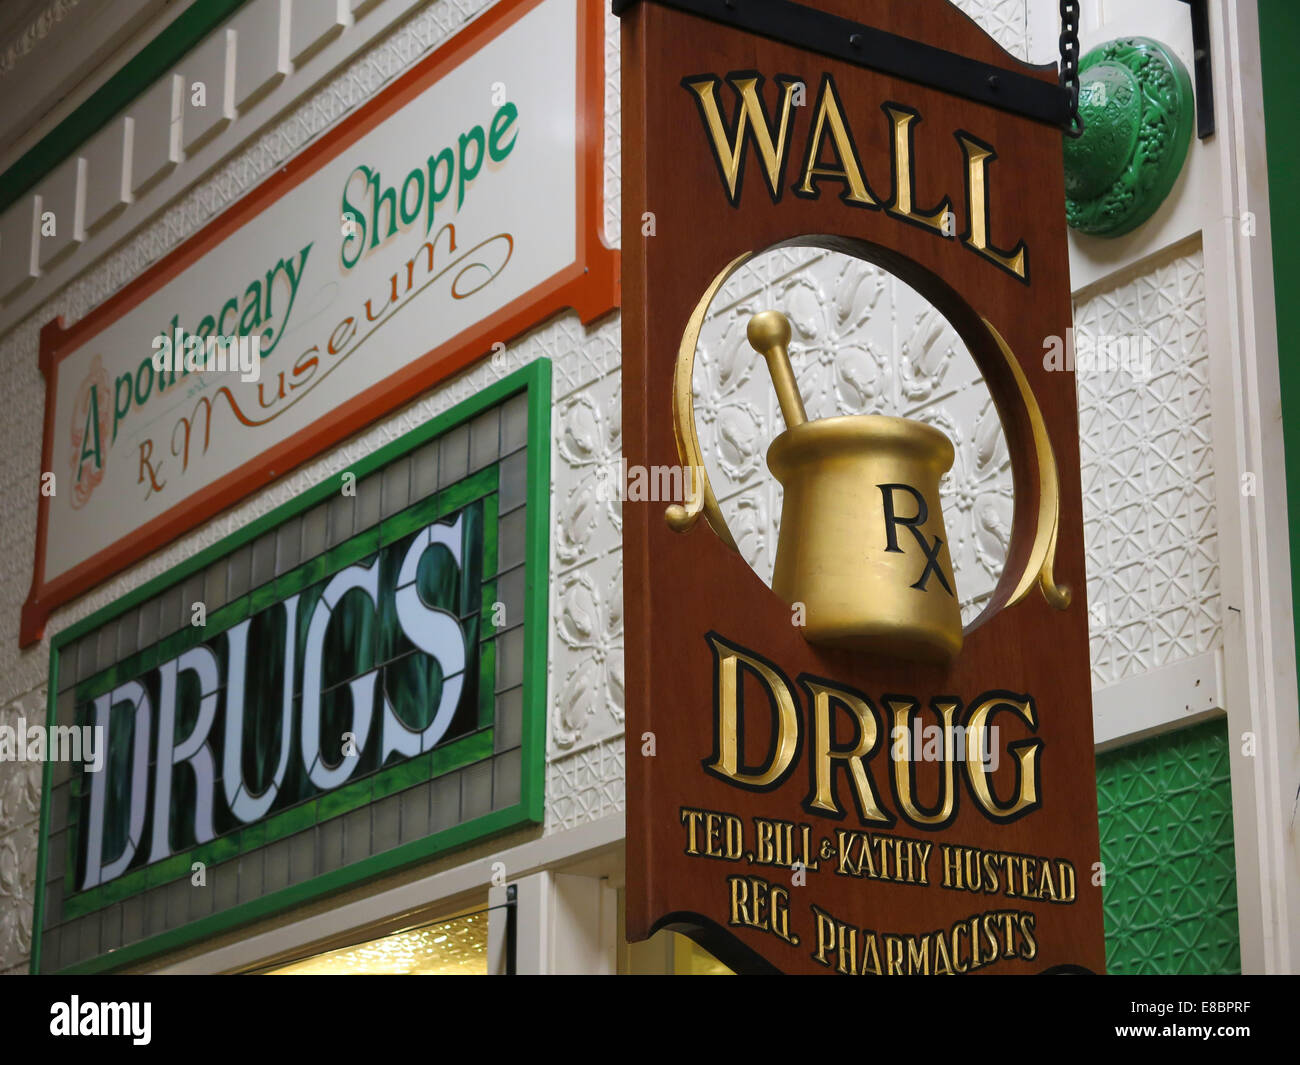 Wall Drug Store Apothicairerie Shoppe et musée, Wall, South Dakota, USA Banque D'Images